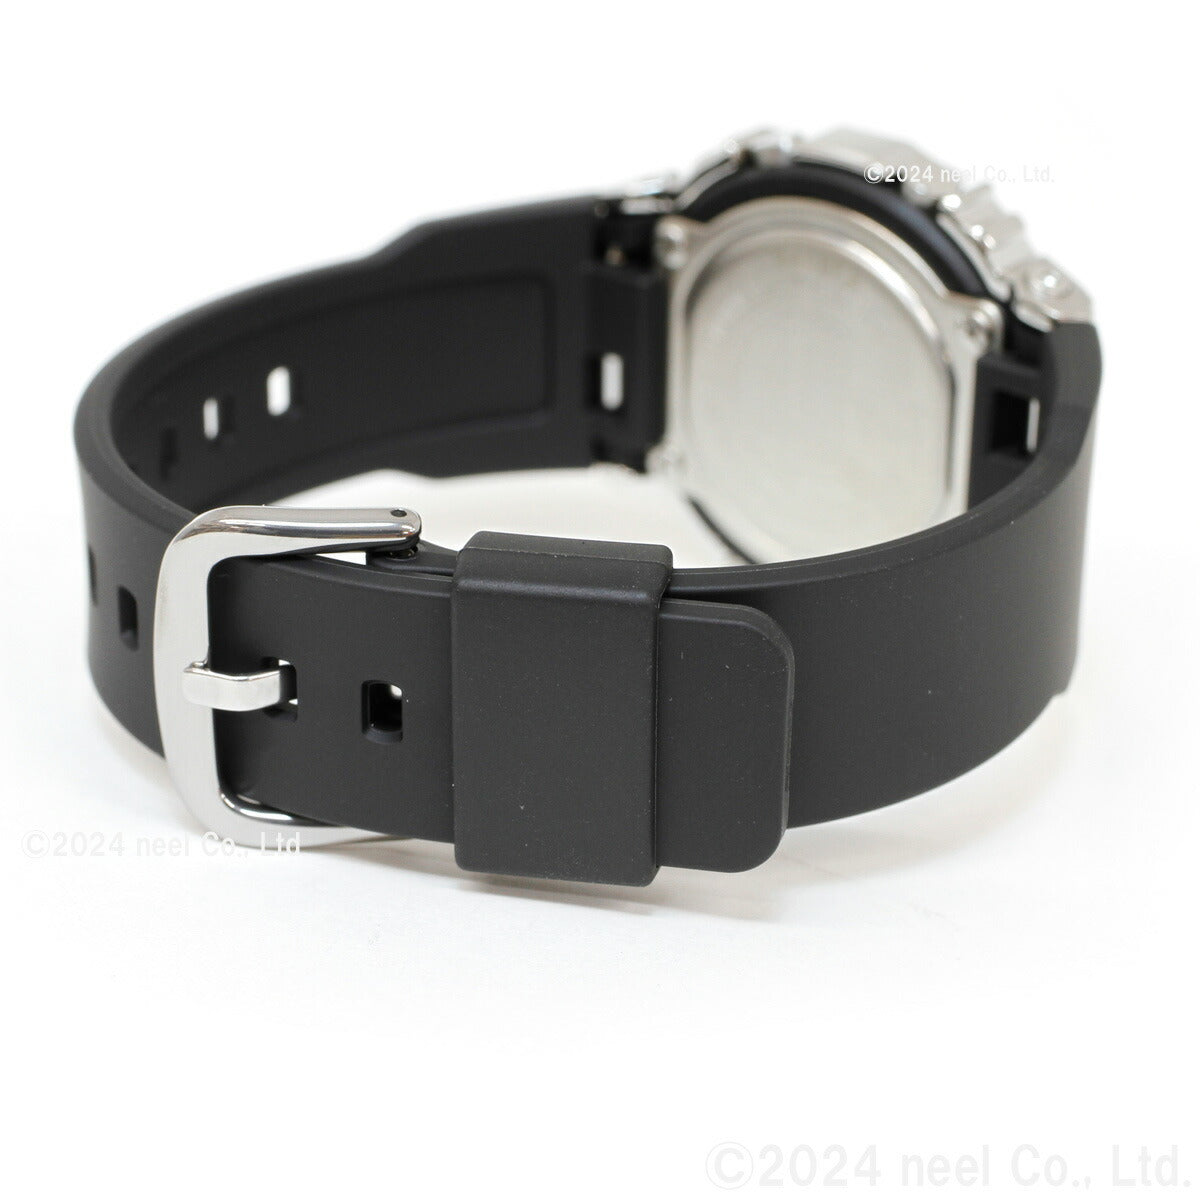 G-SHOCK カシオ Gショック CASIO デジタル 腕時計 メンズ レディース GM-S5600U-1JF ブラック シルバー メタルカバー コンパクトサイズ LEDバックライト